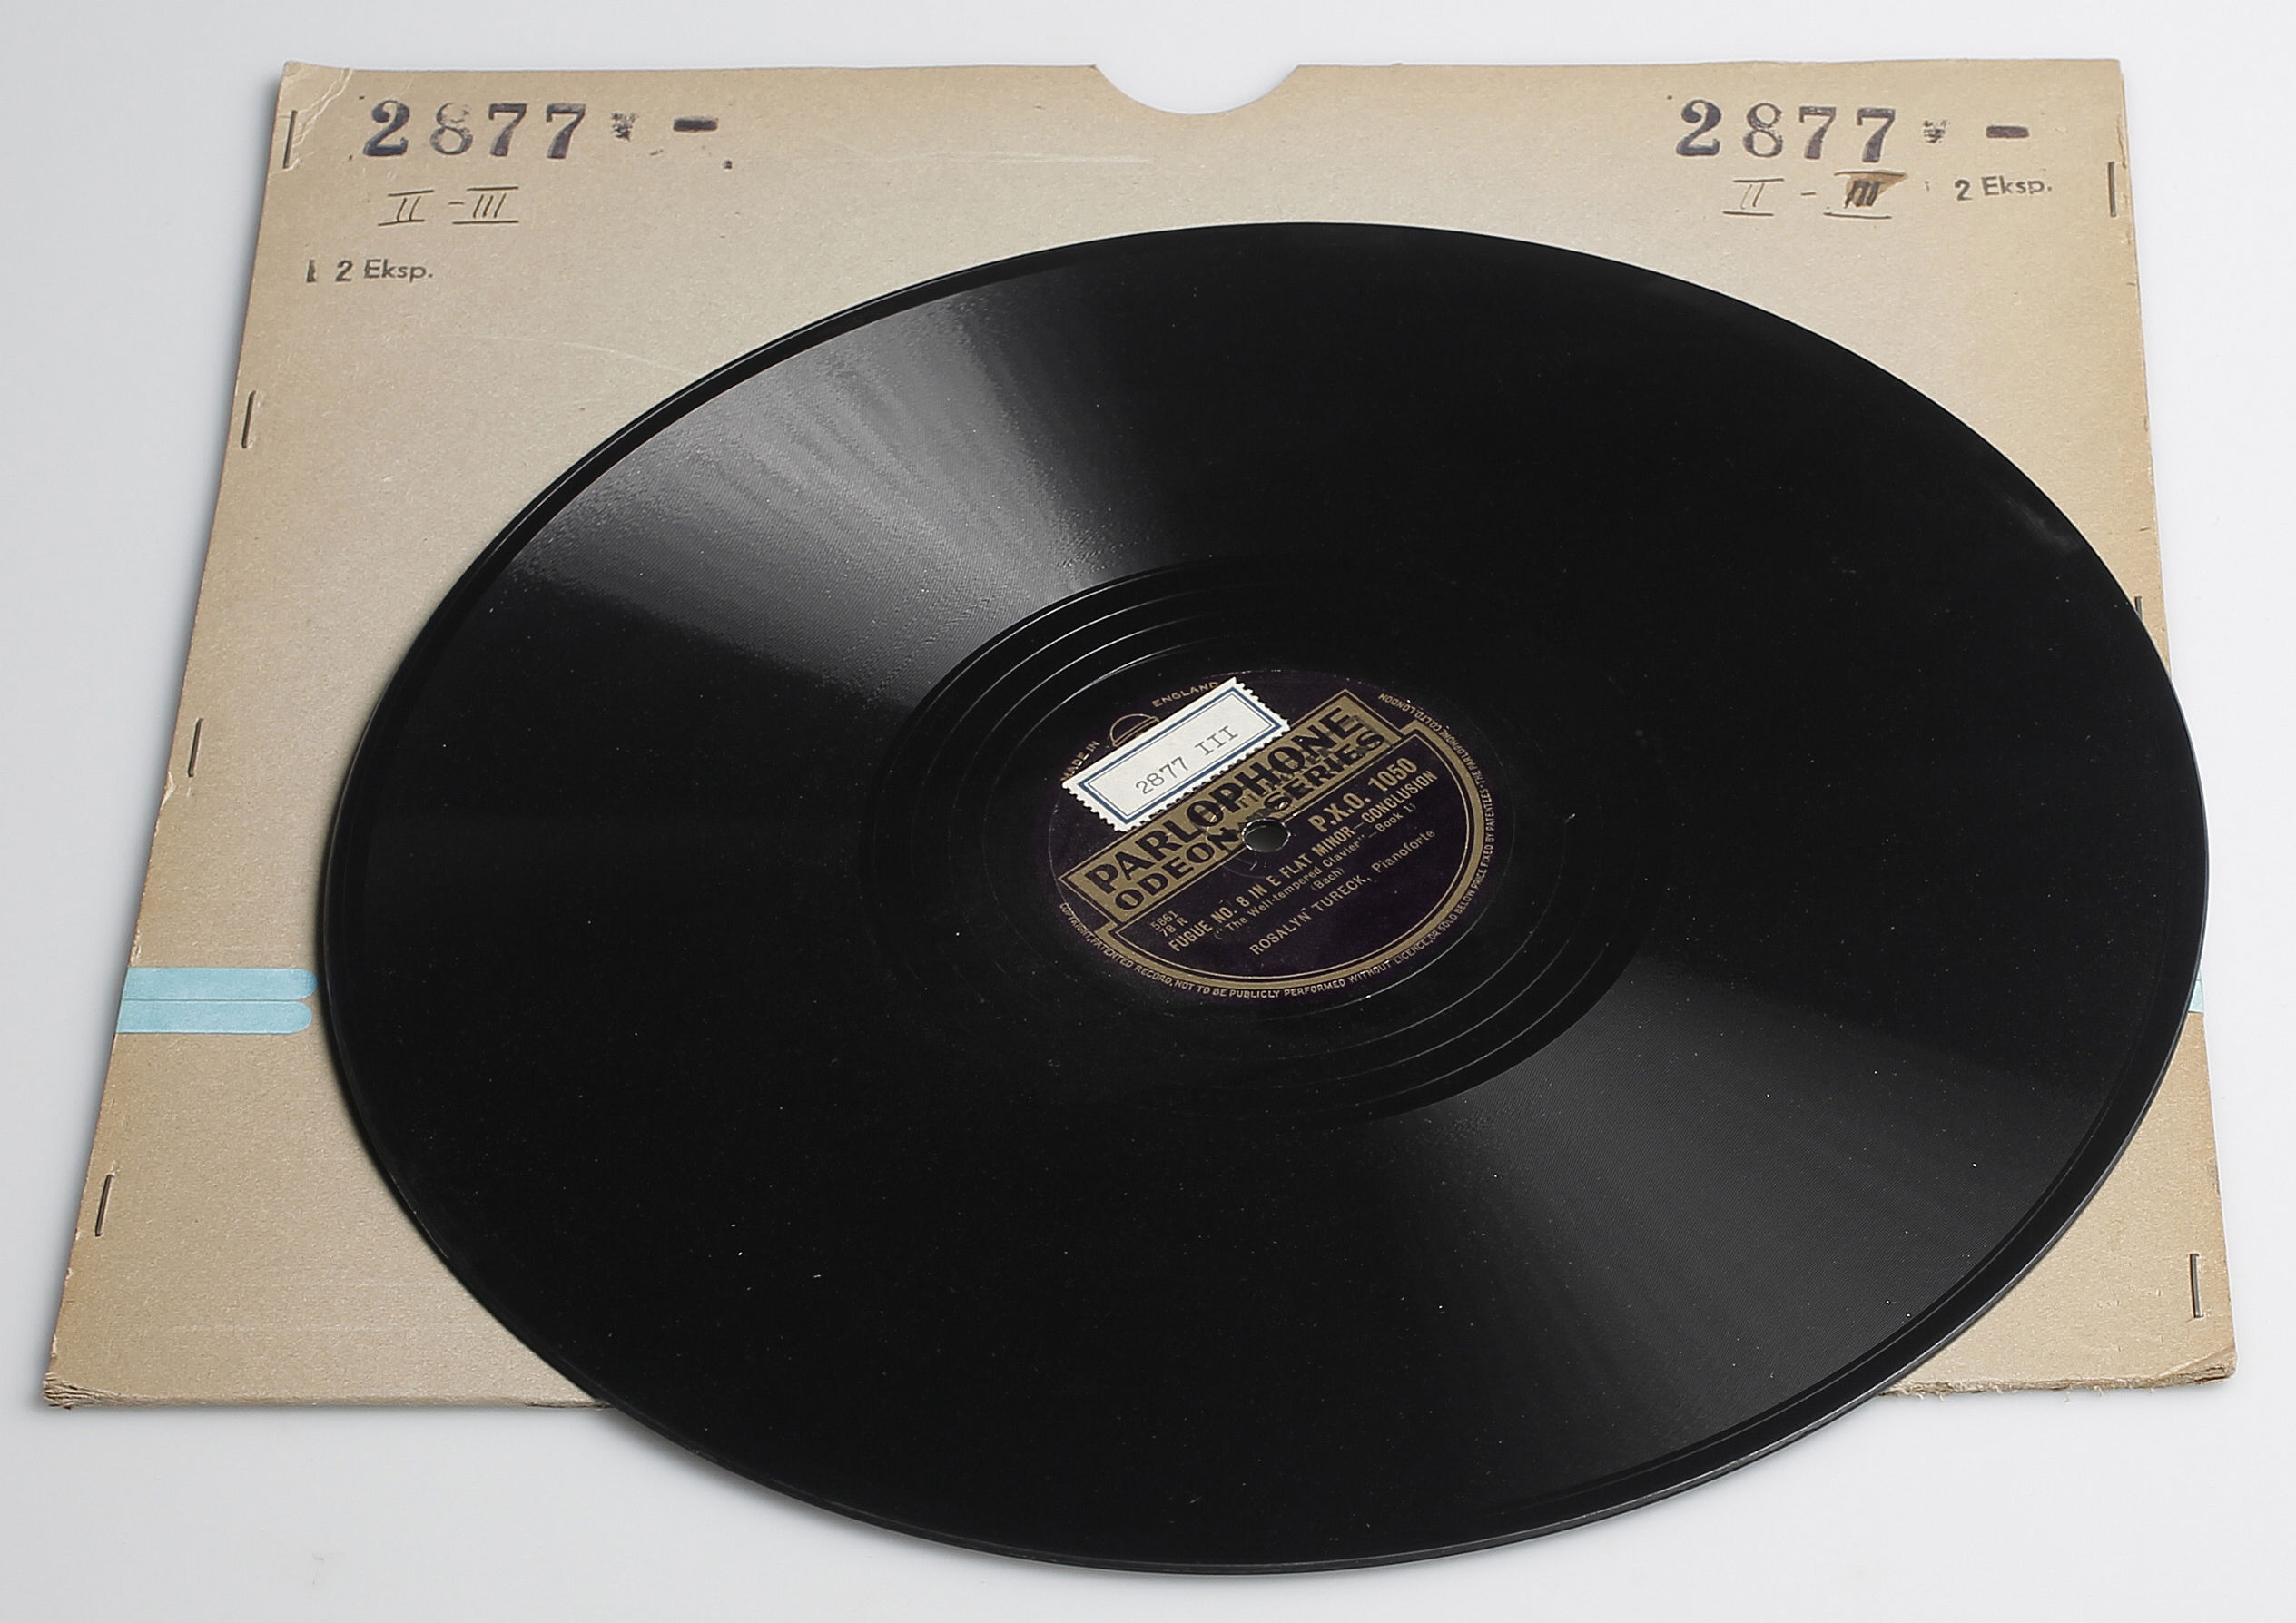 Renaissance for vinyl records — Harvard Gazette